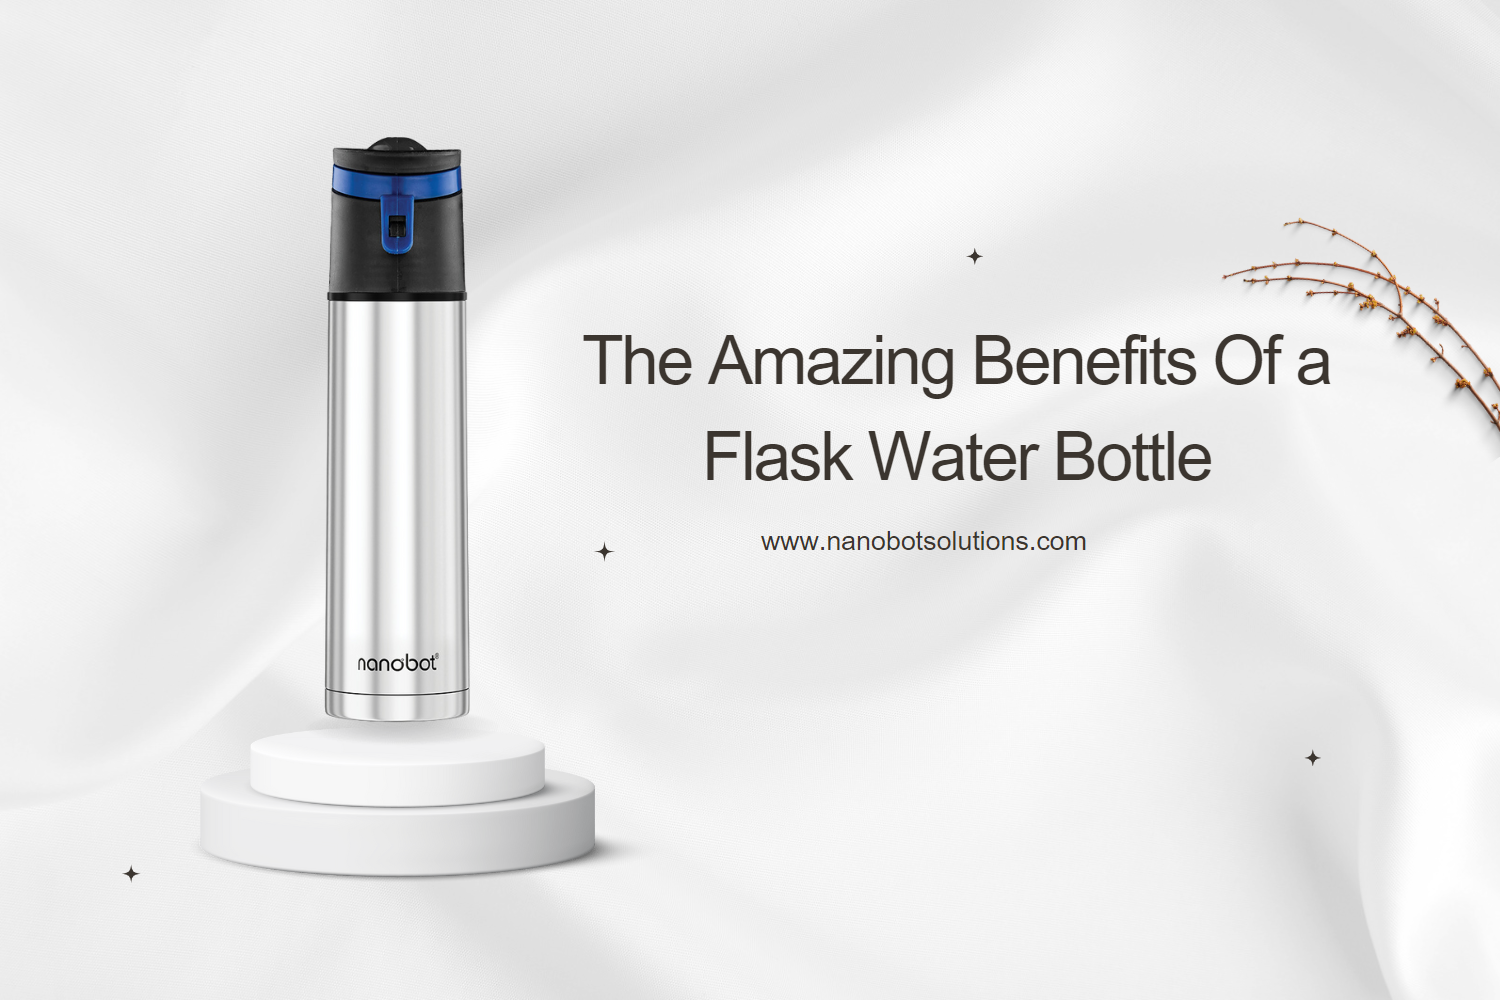 The Amazing Benefits of a Flask Water Bottle -Nanobot